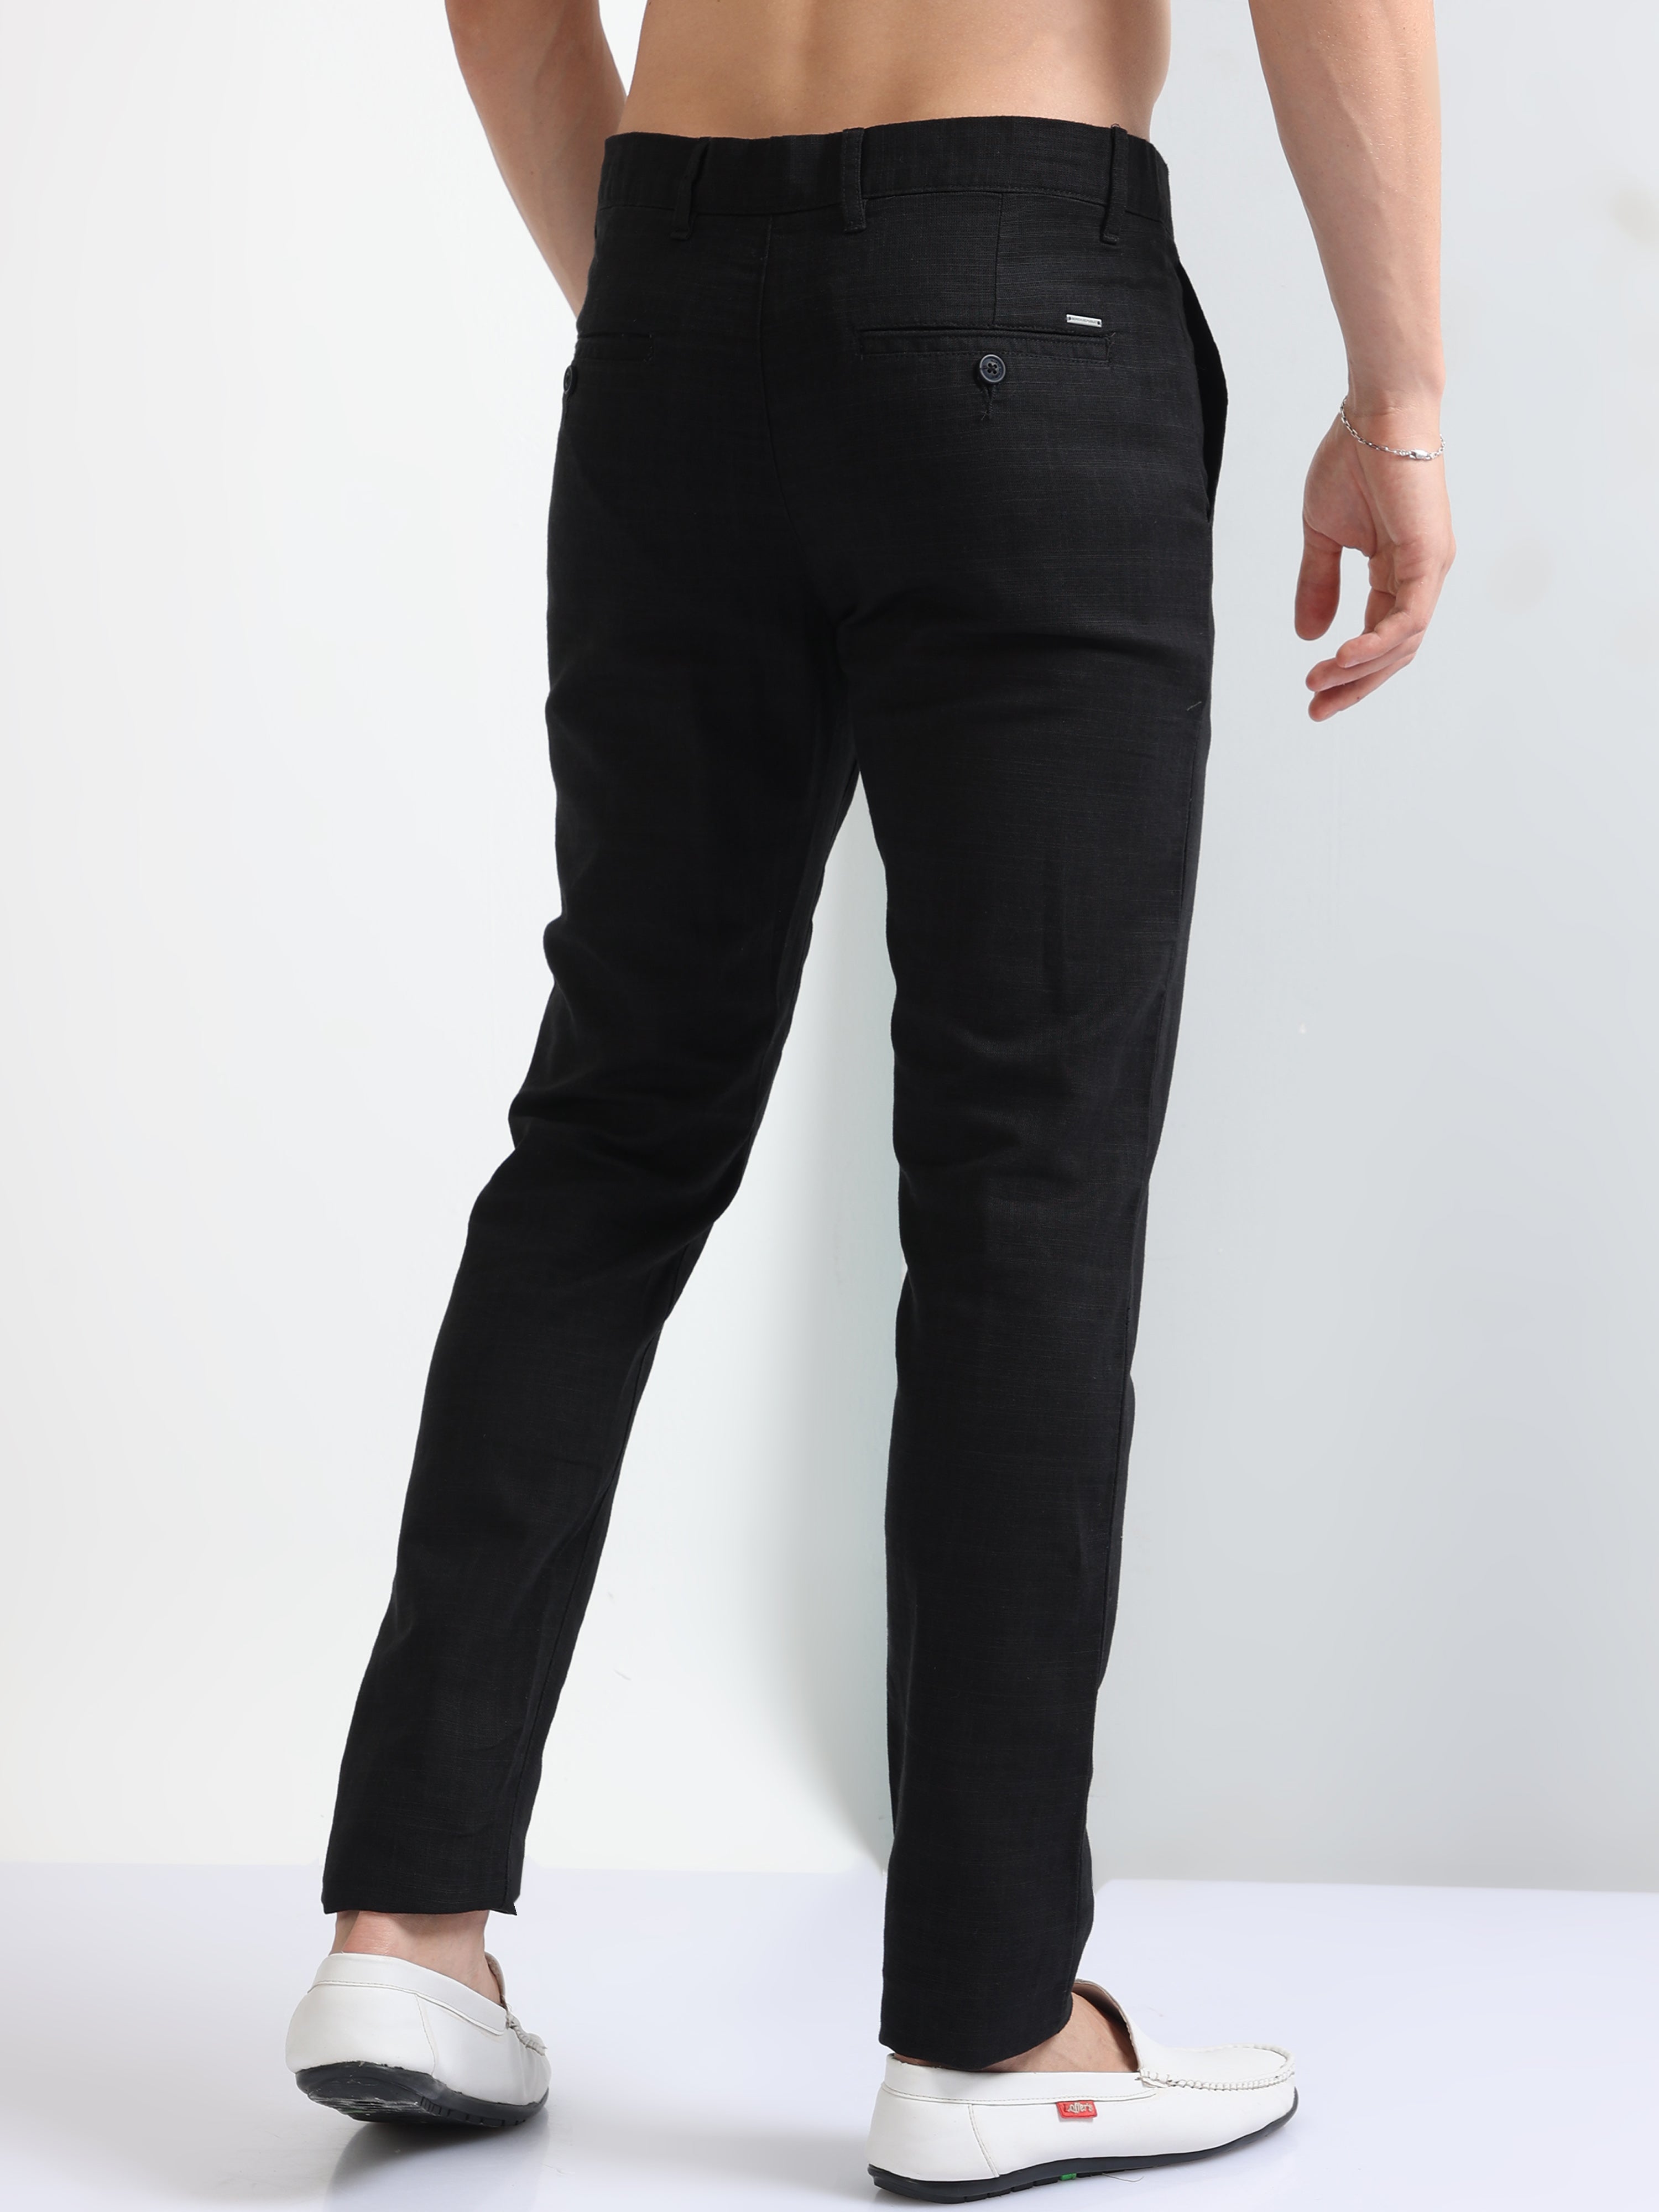 Bata slipper 7uk black | xyxx cotton trousers pack of 3. in Srinagar |  Clasf fashion